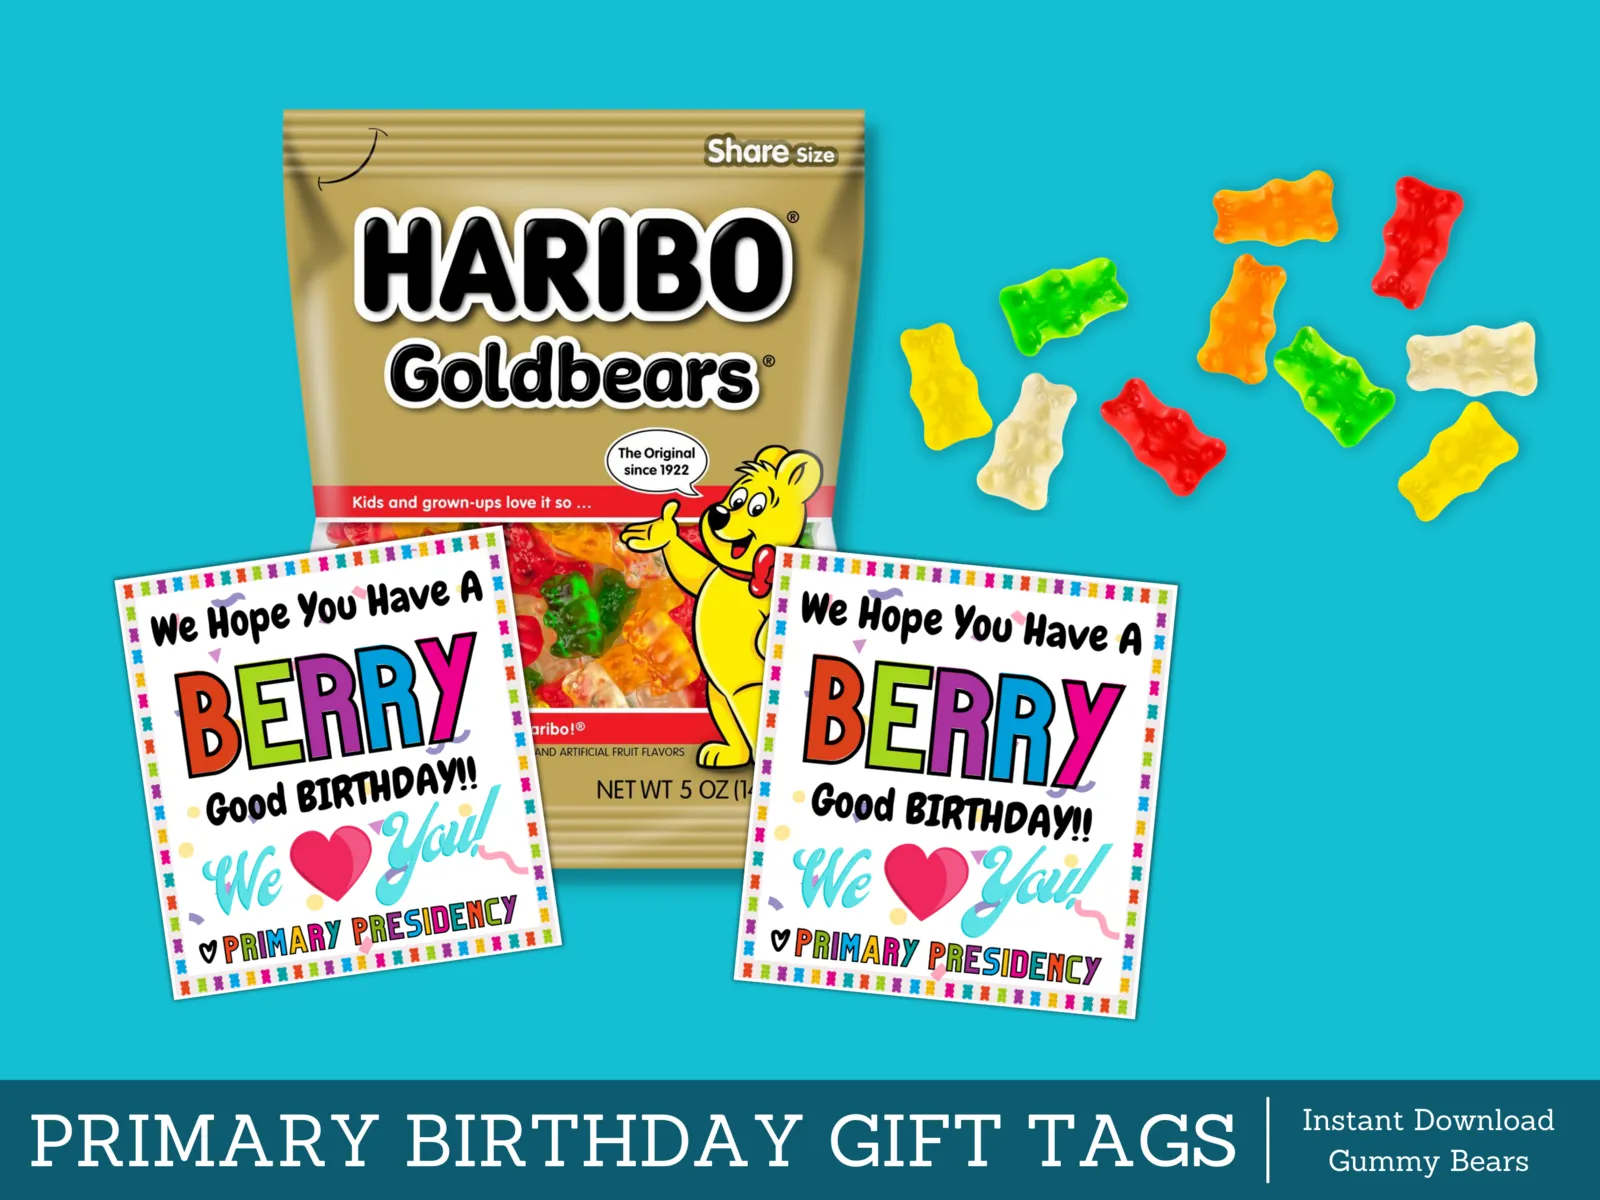 primary birthday gift idea gummy bears